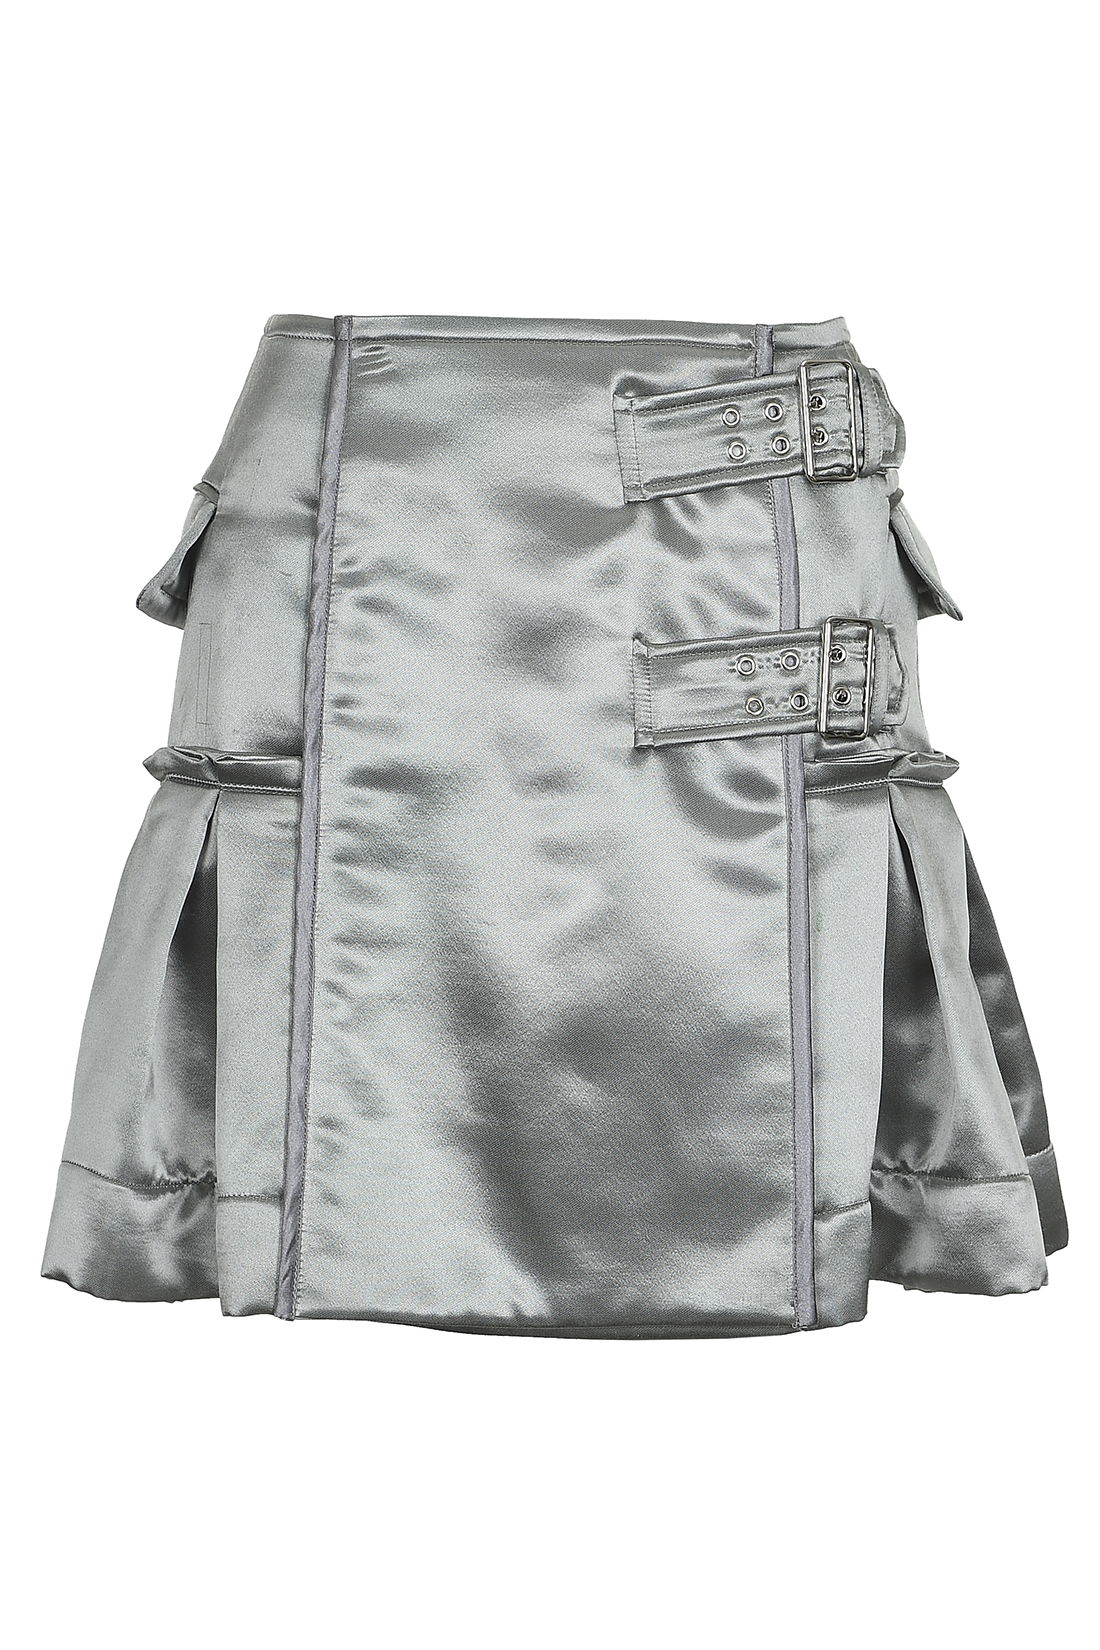 [SAMPLE SALE] Buckle detail Pleated Mini skirt_Silver